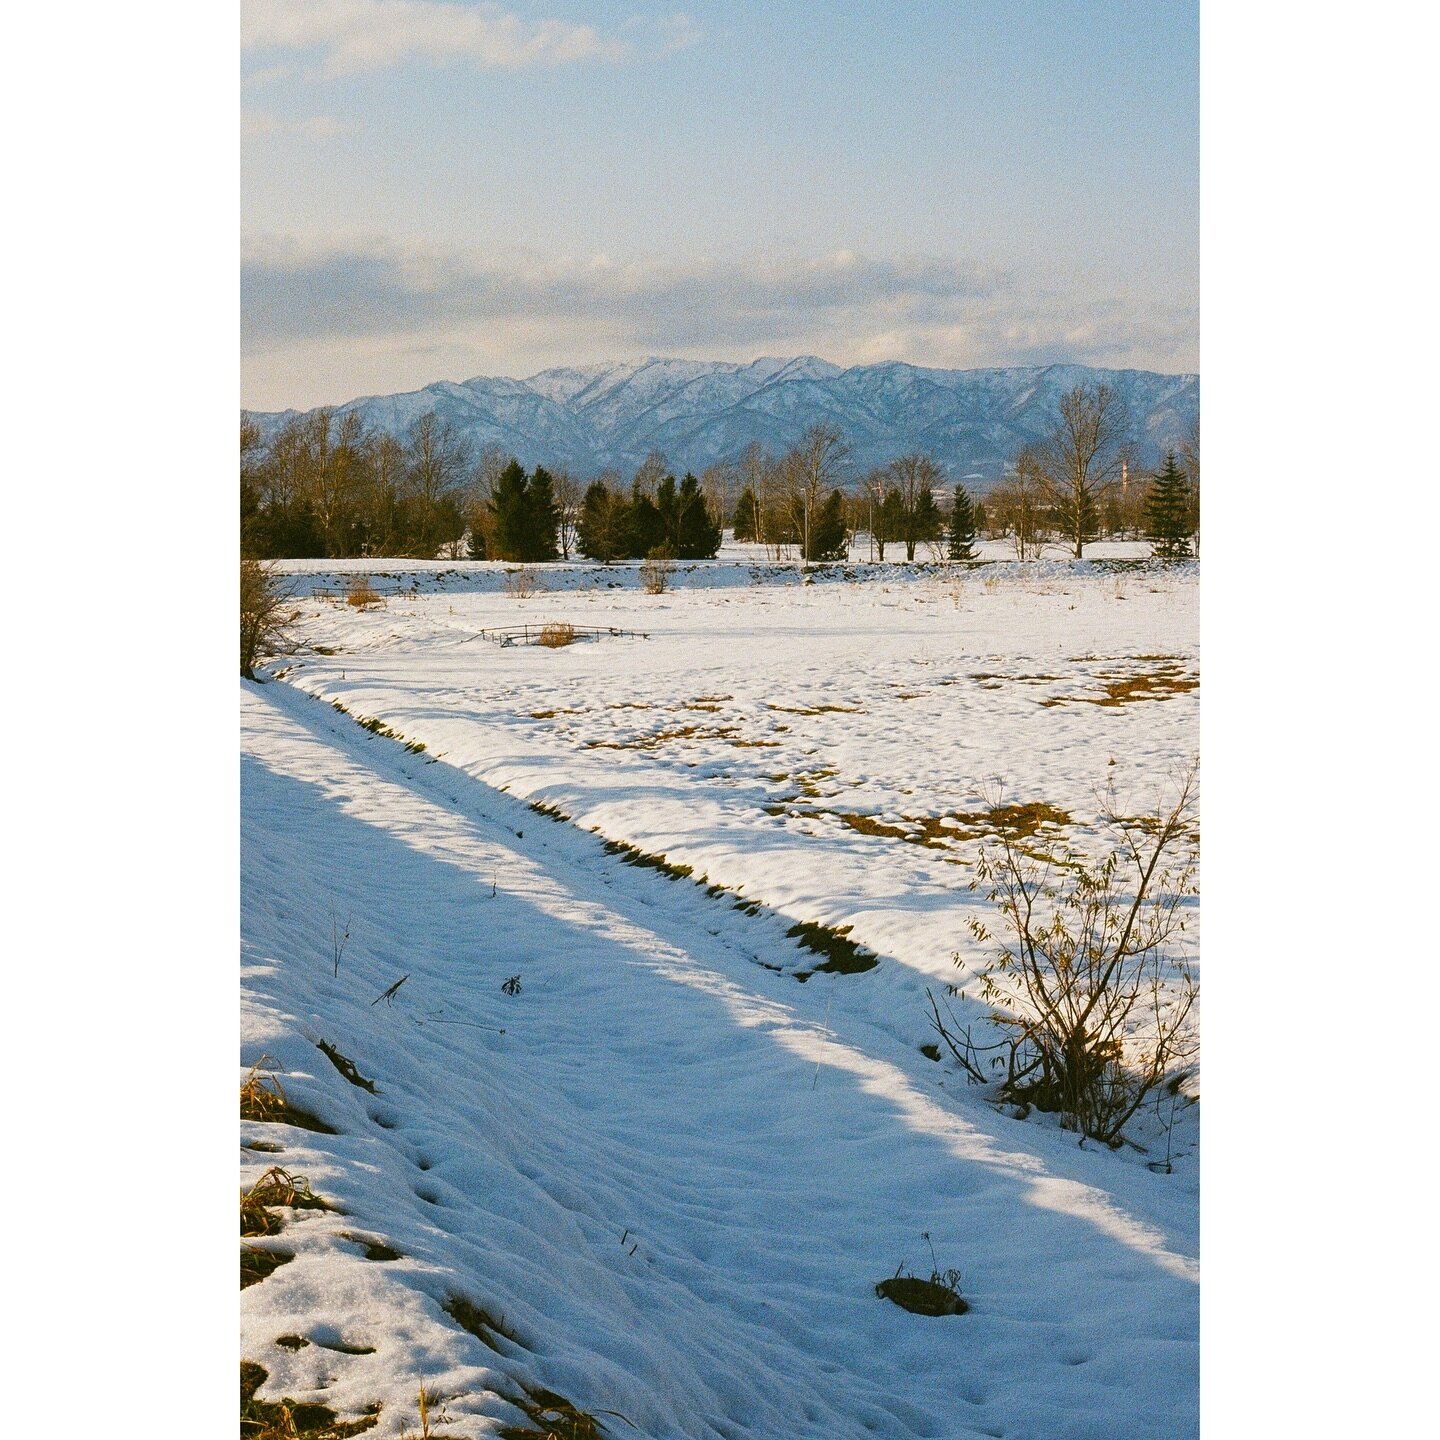 Looking toward the Shokanbetsudake Mountains, Hokkaido
.
#35mm #infilmwetrust #analogphotography #filmphotography #analogfilm #thefilmrenaissance #moderndayanalogue #filmisnotdead #thefilmstead #restorefrombackup #negativemag #naturefilmed #madewithk